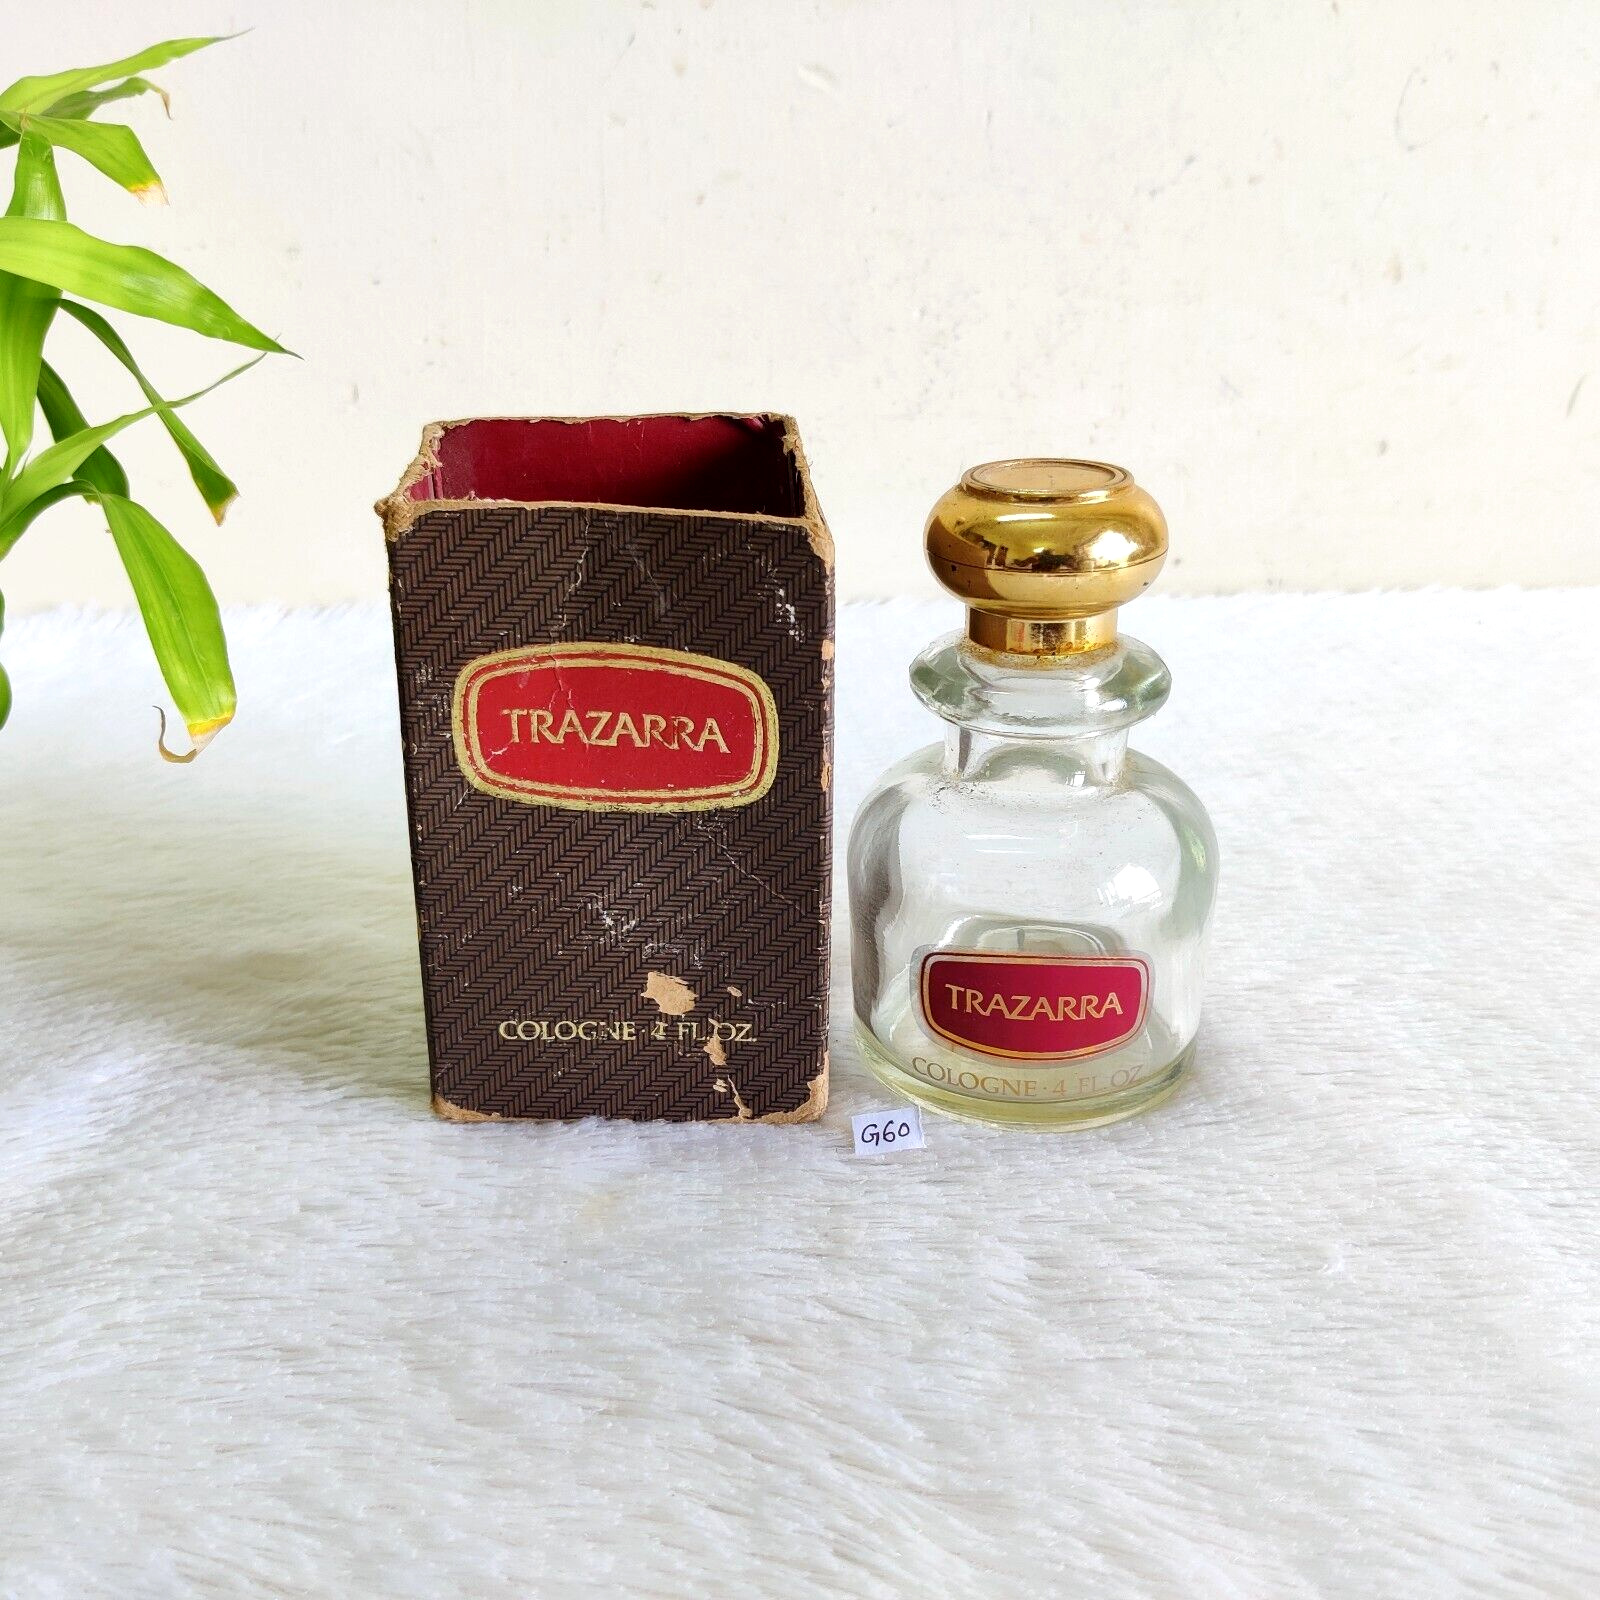 1970s Vintage Trazarra Cologne 4 Fl Oz Perfume Clear Glass Bottle Decorative G60